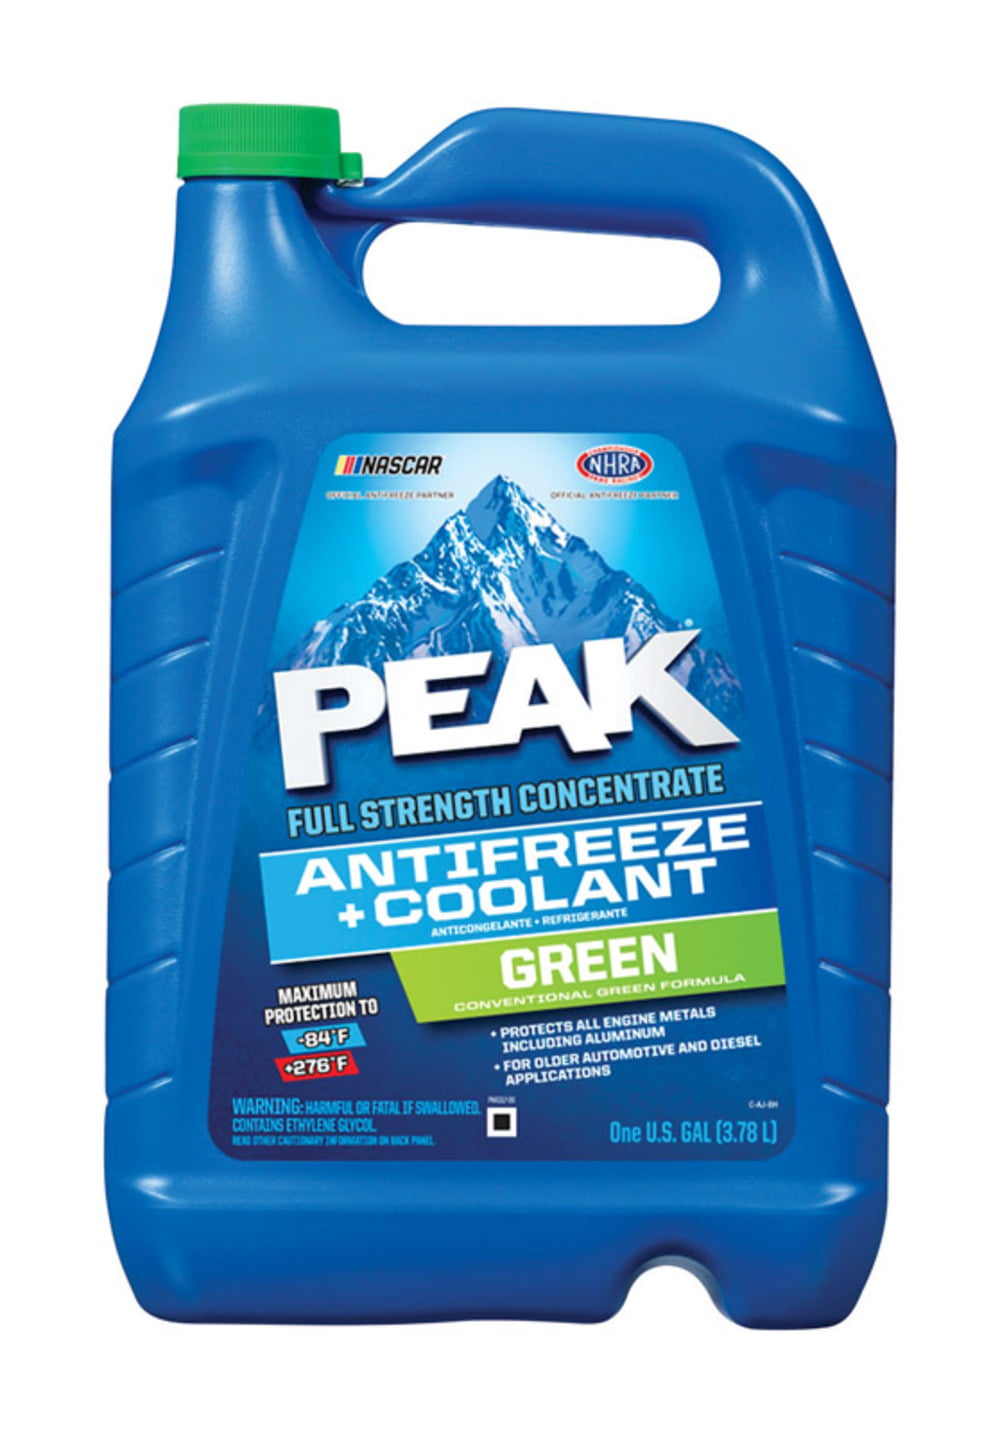 Is Peak Antifreeze Good